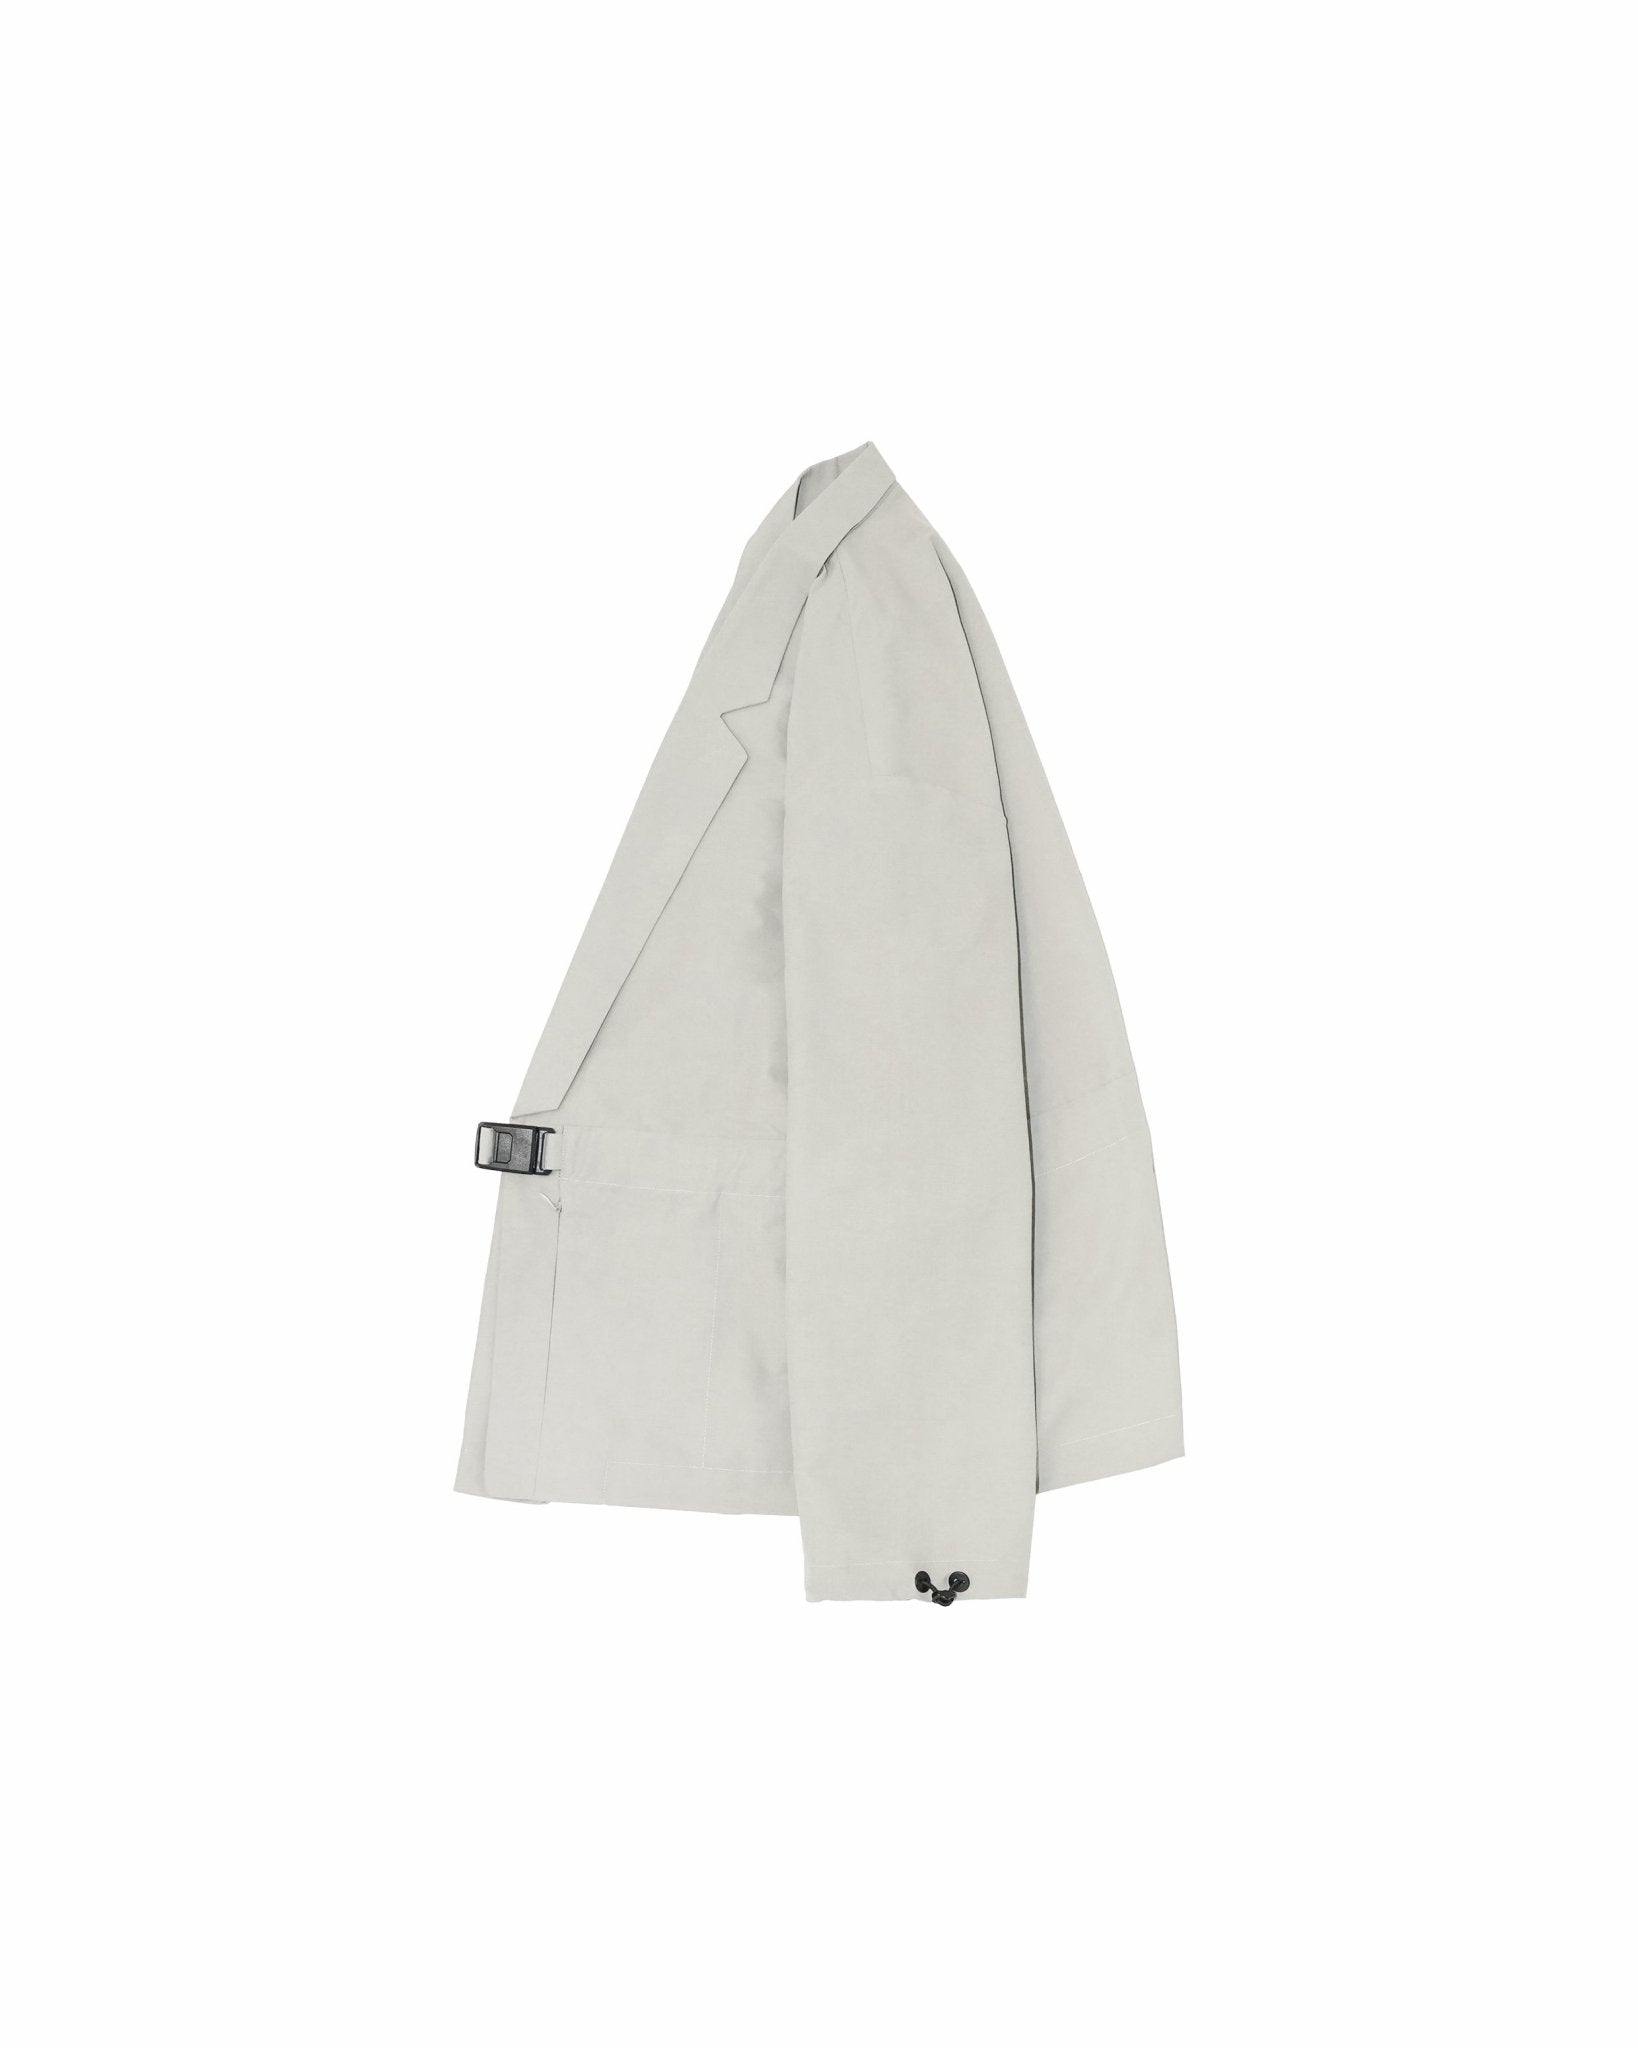 Kimono Buckle Jacket - Steel - G R A Y E